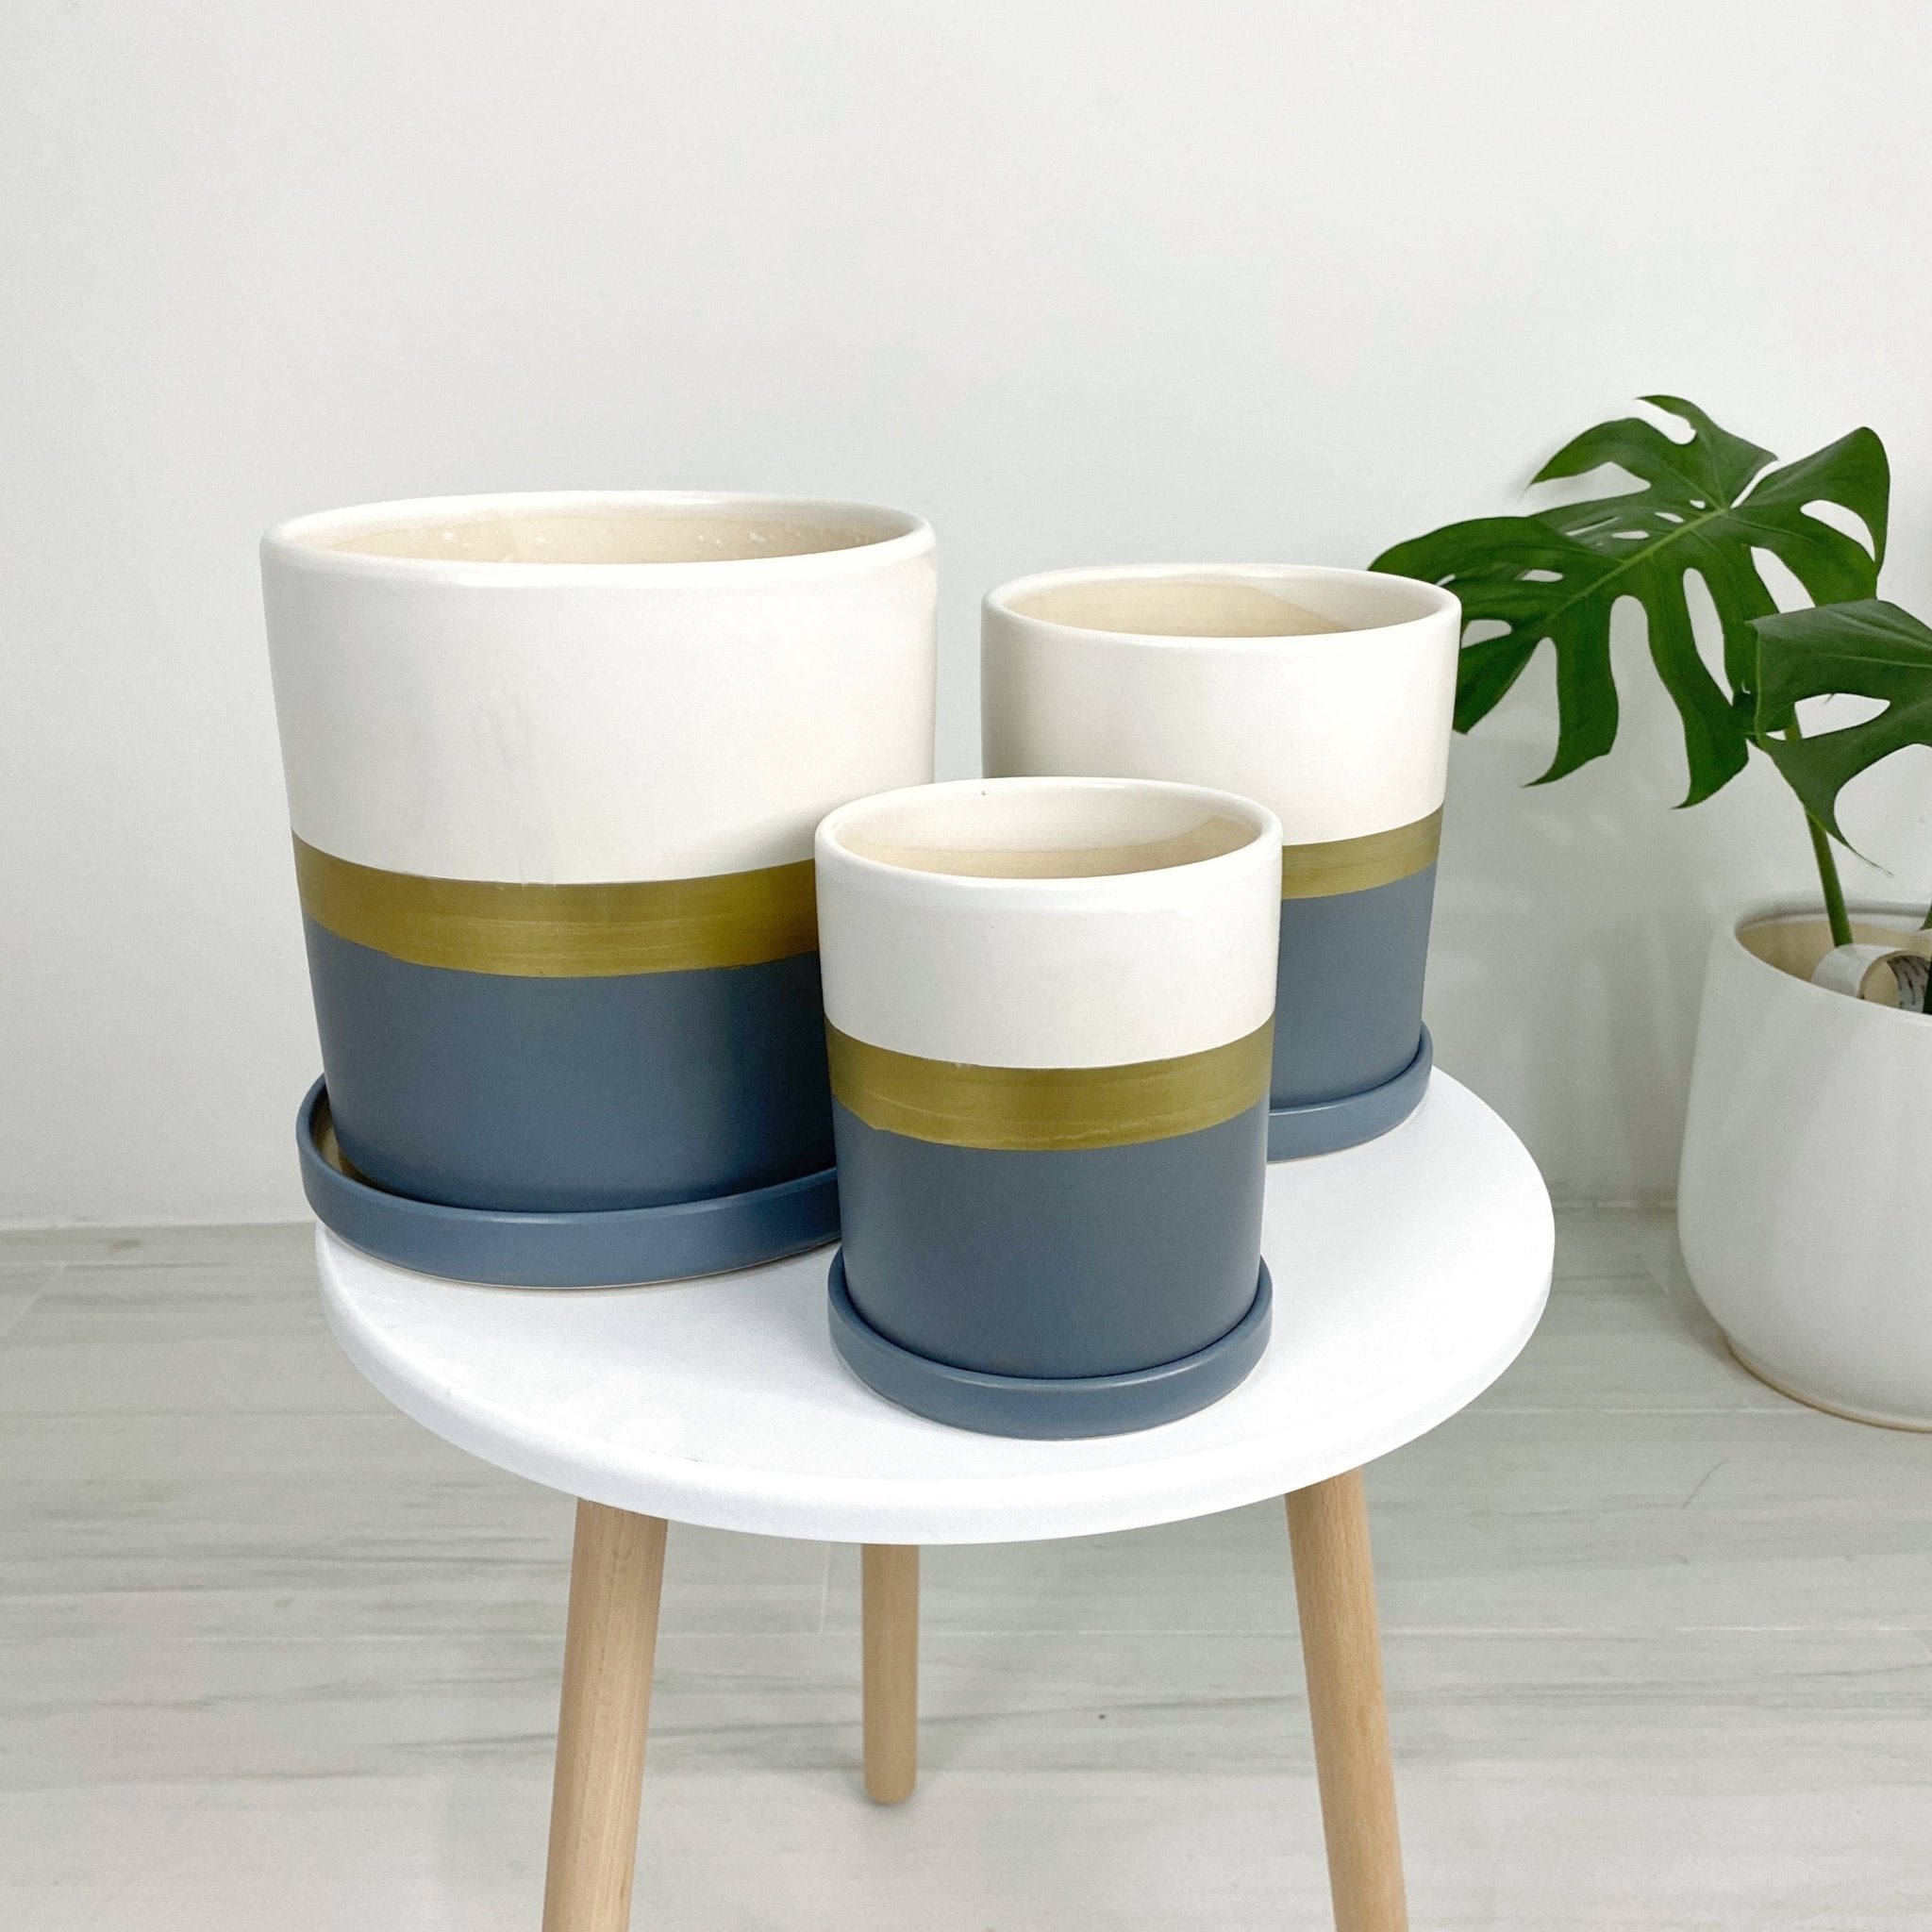 Cylinder Glazed Clay Ceramic Pot with Ceramic Saucer - Pots For Plants